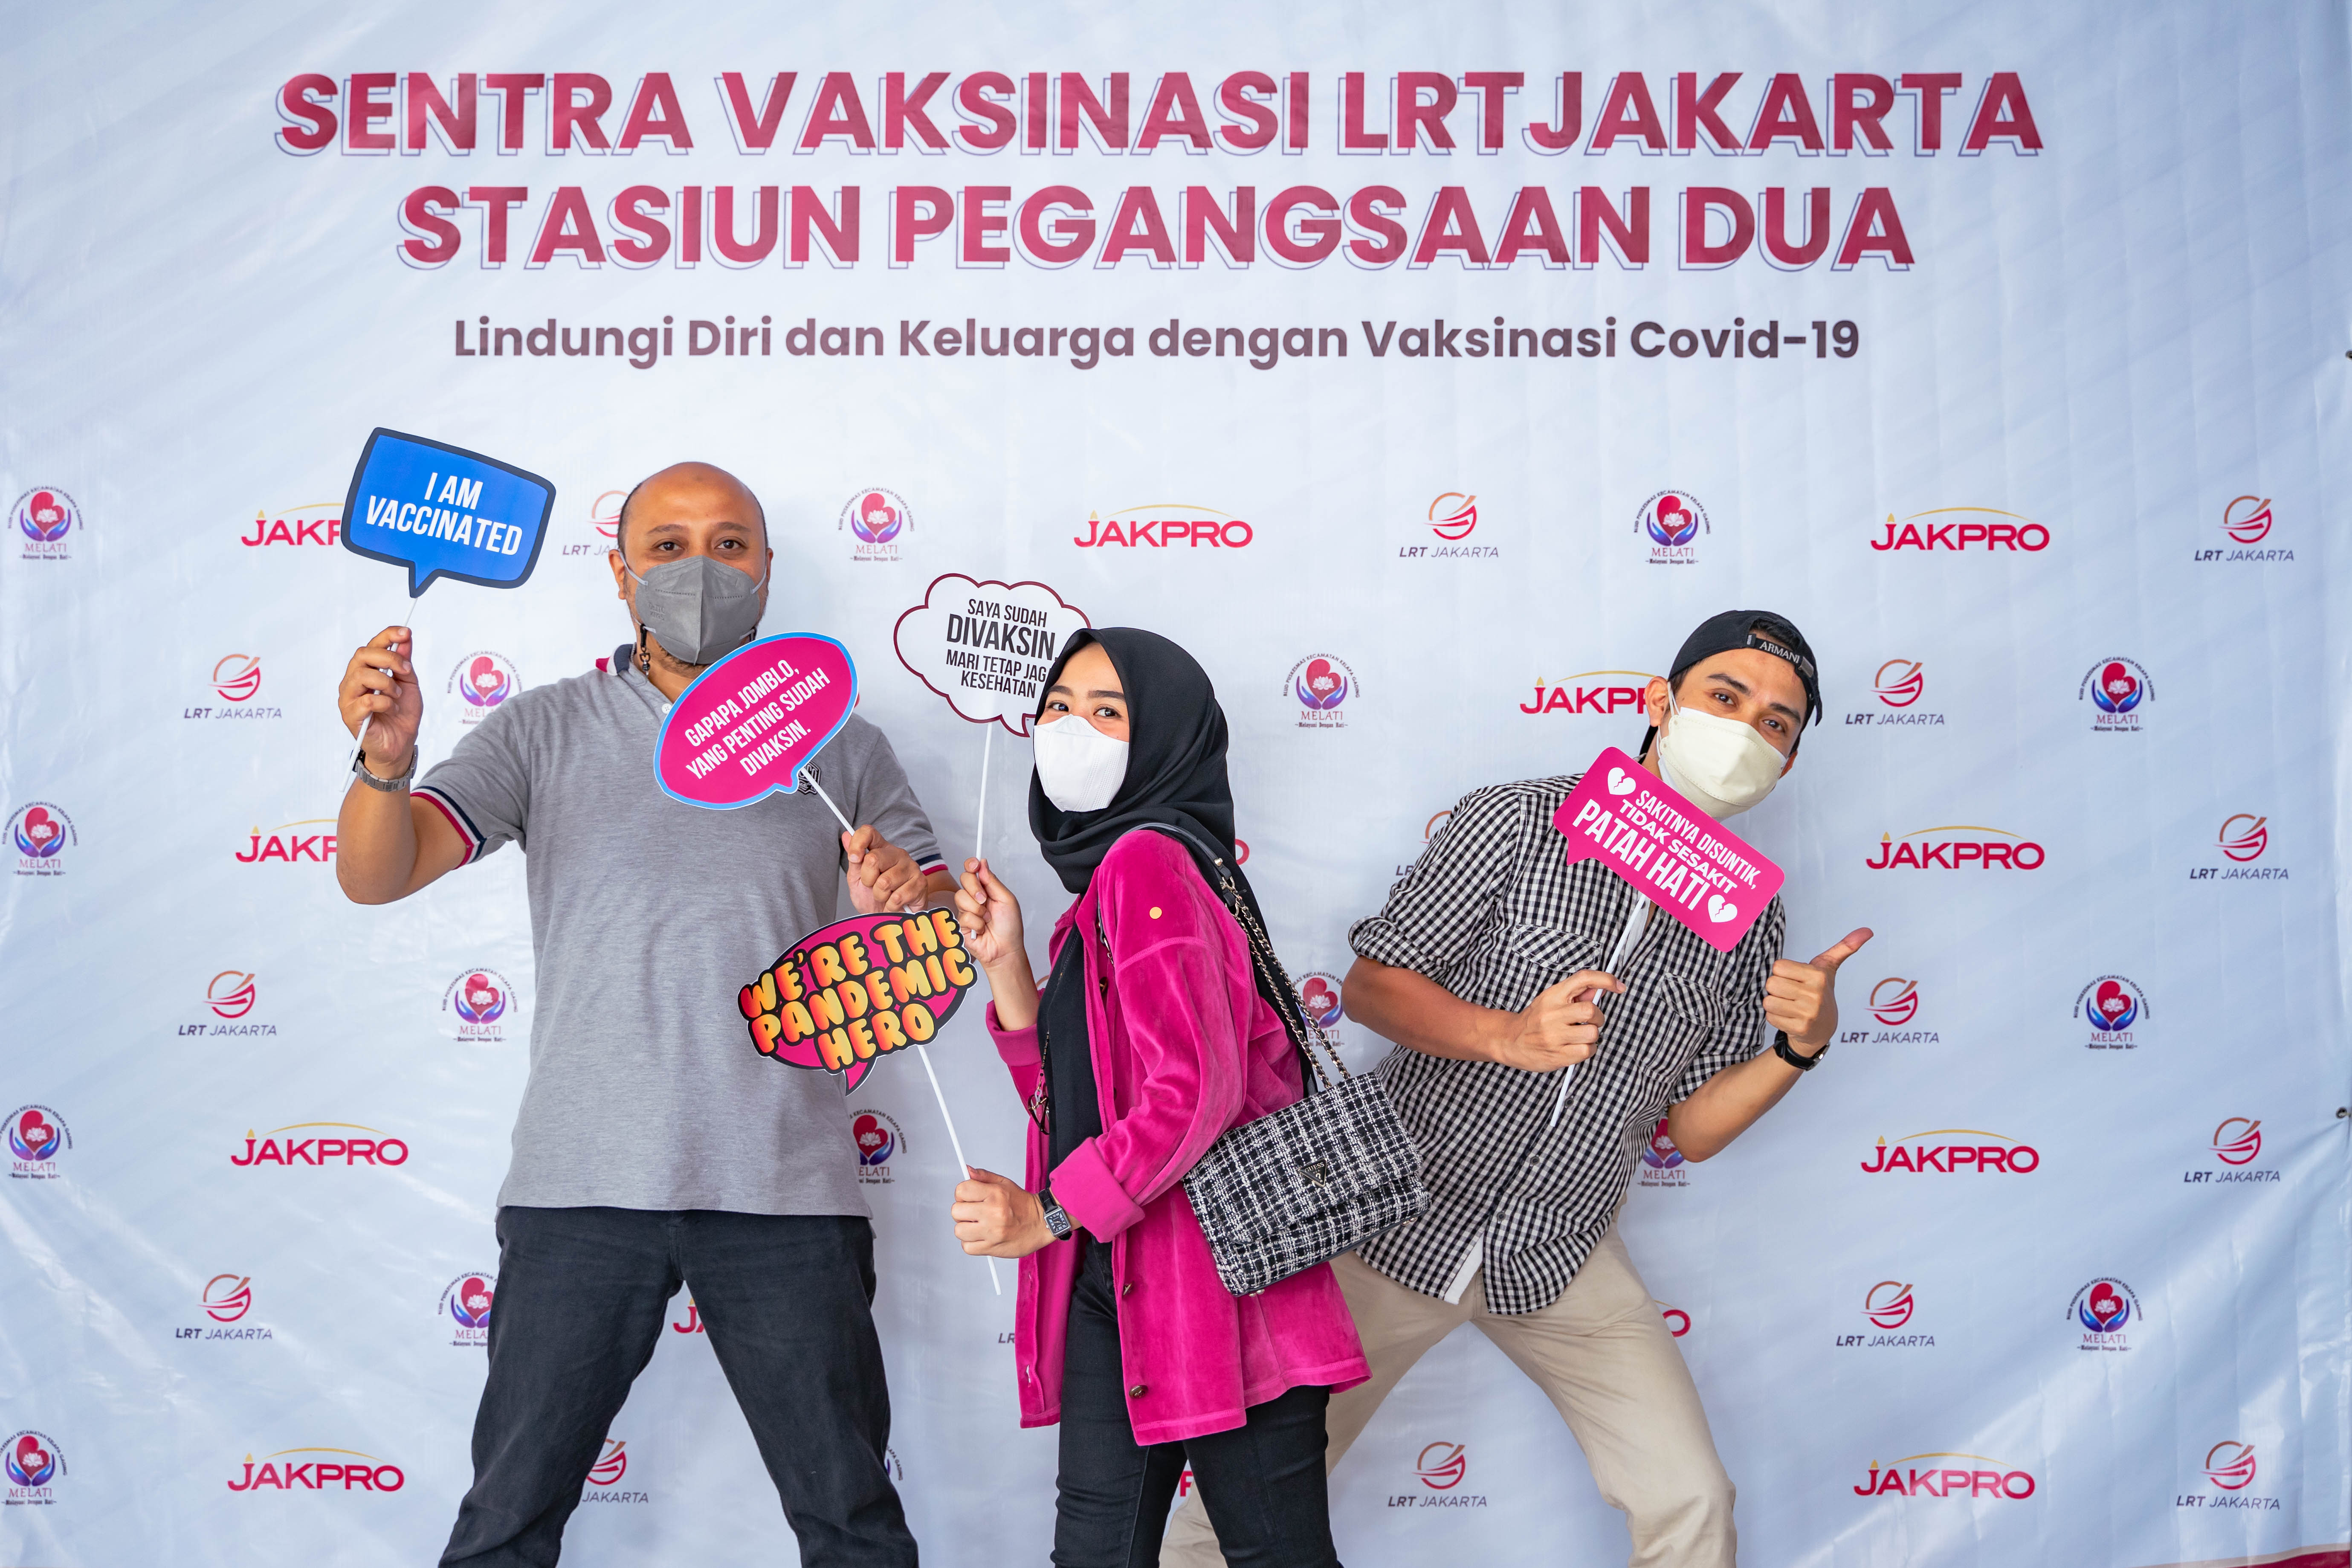 Sentra Vaksinasi LRT Jakarta